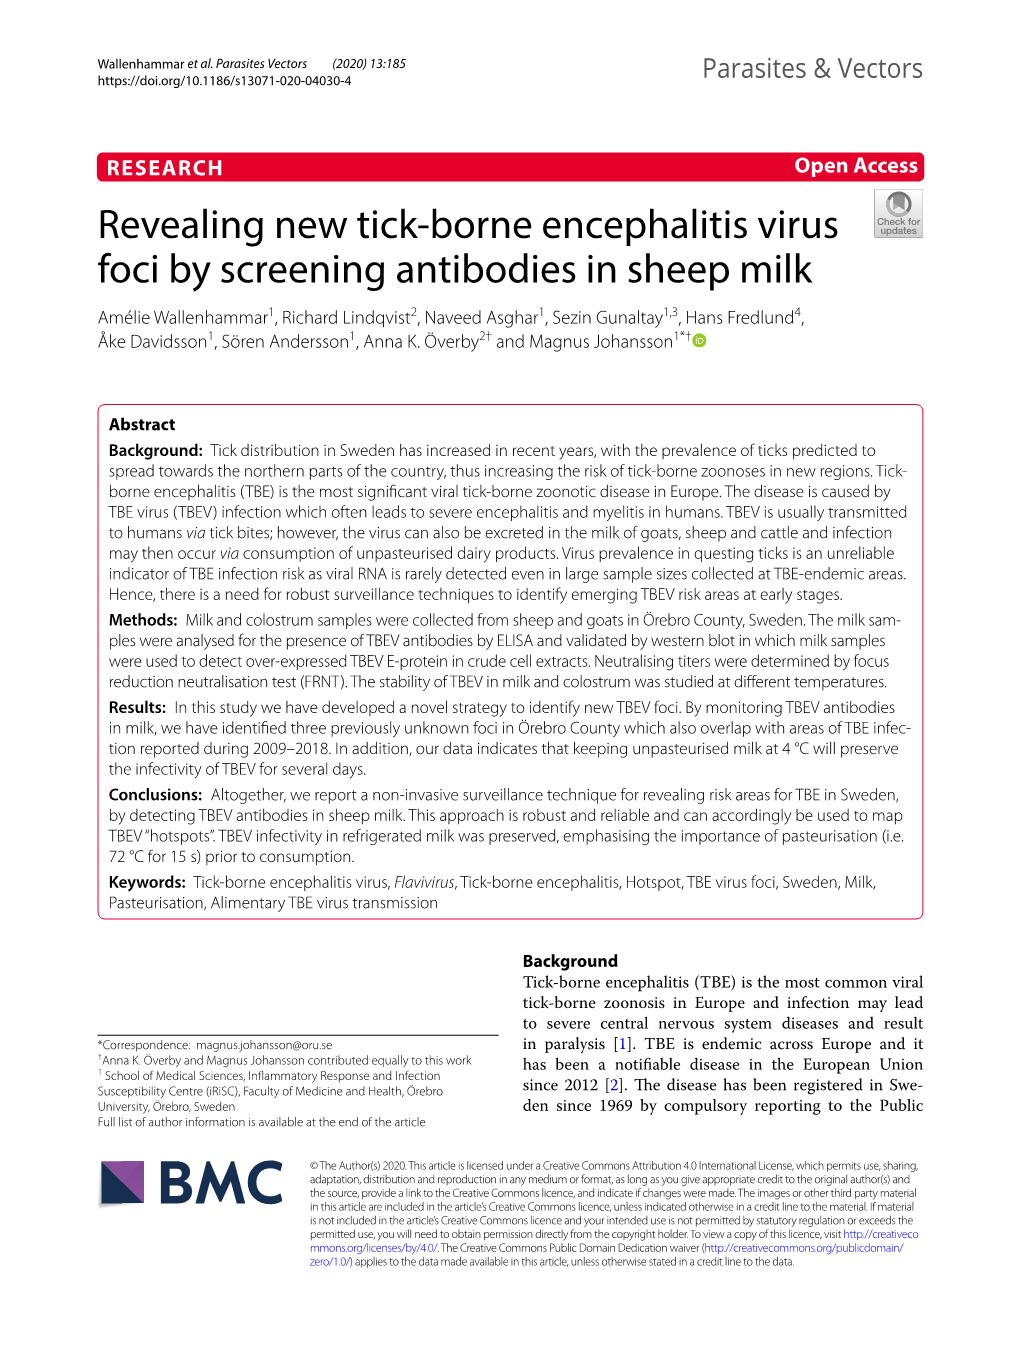 Revealing New Tick-Borne Encephalitis Virus Foci by Screening Antibodies